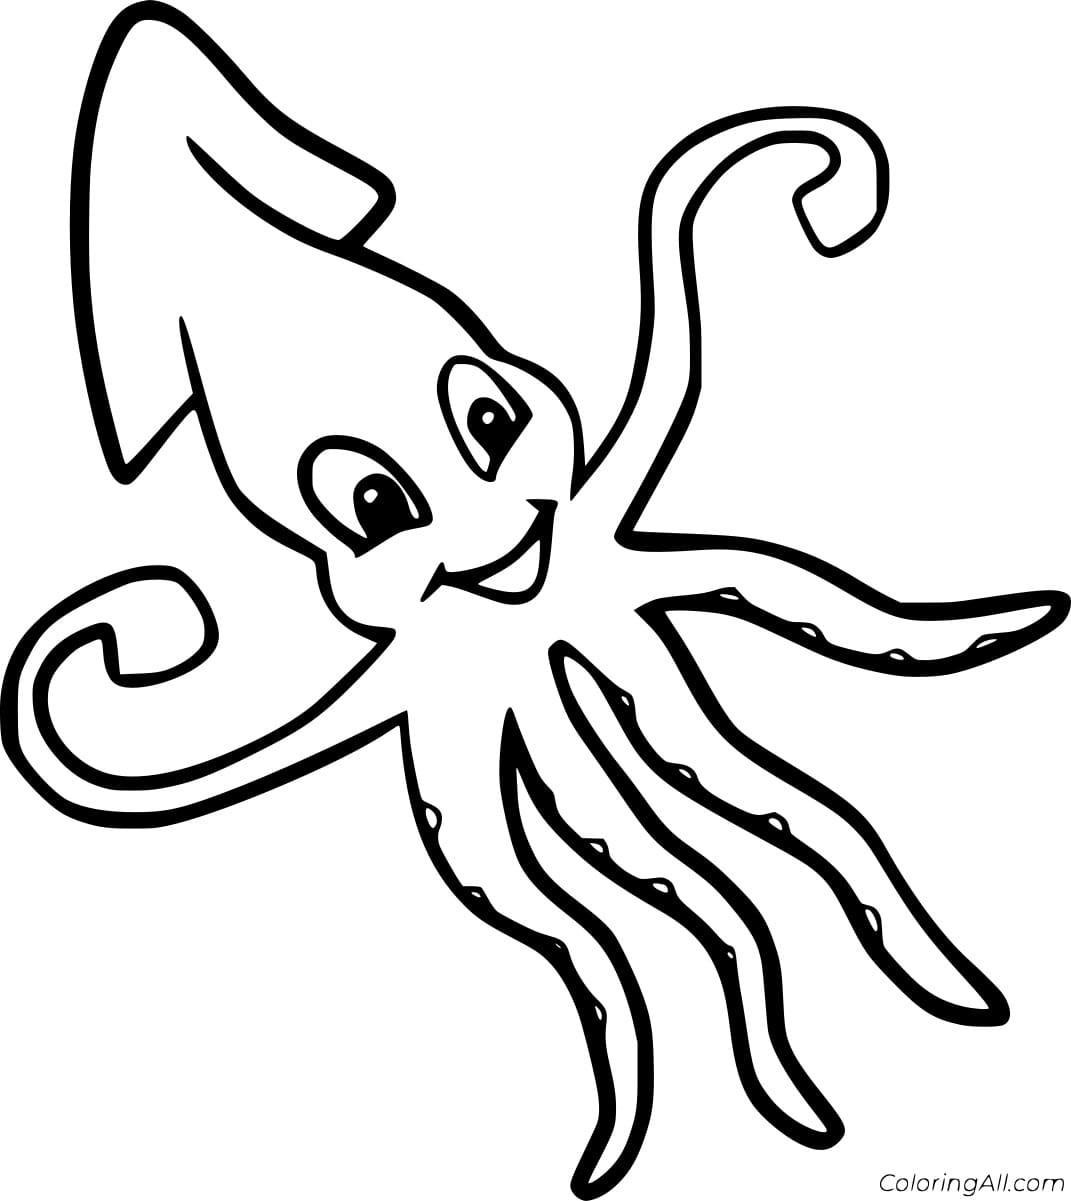 Free Printable Smiling Squid